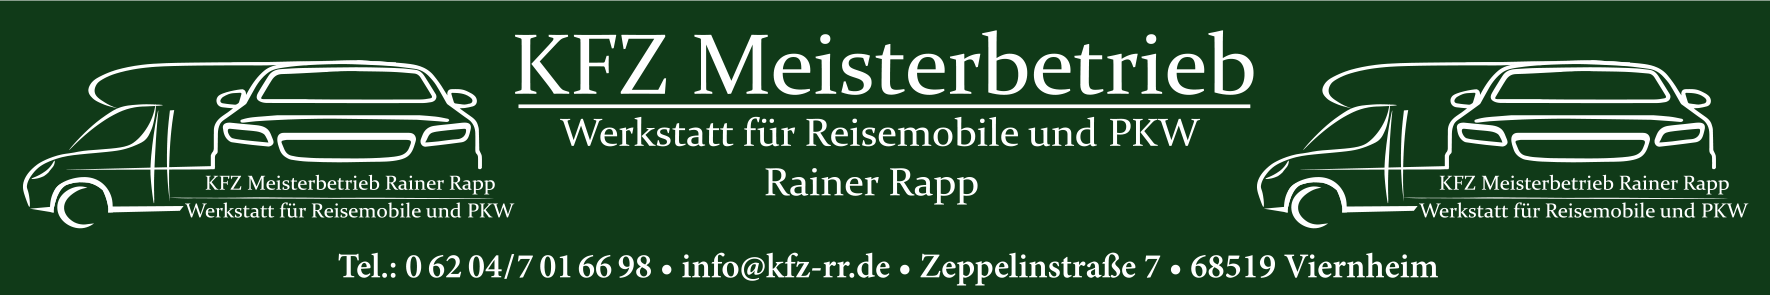 KFZ Meisterbetrieb Rainer Rapp